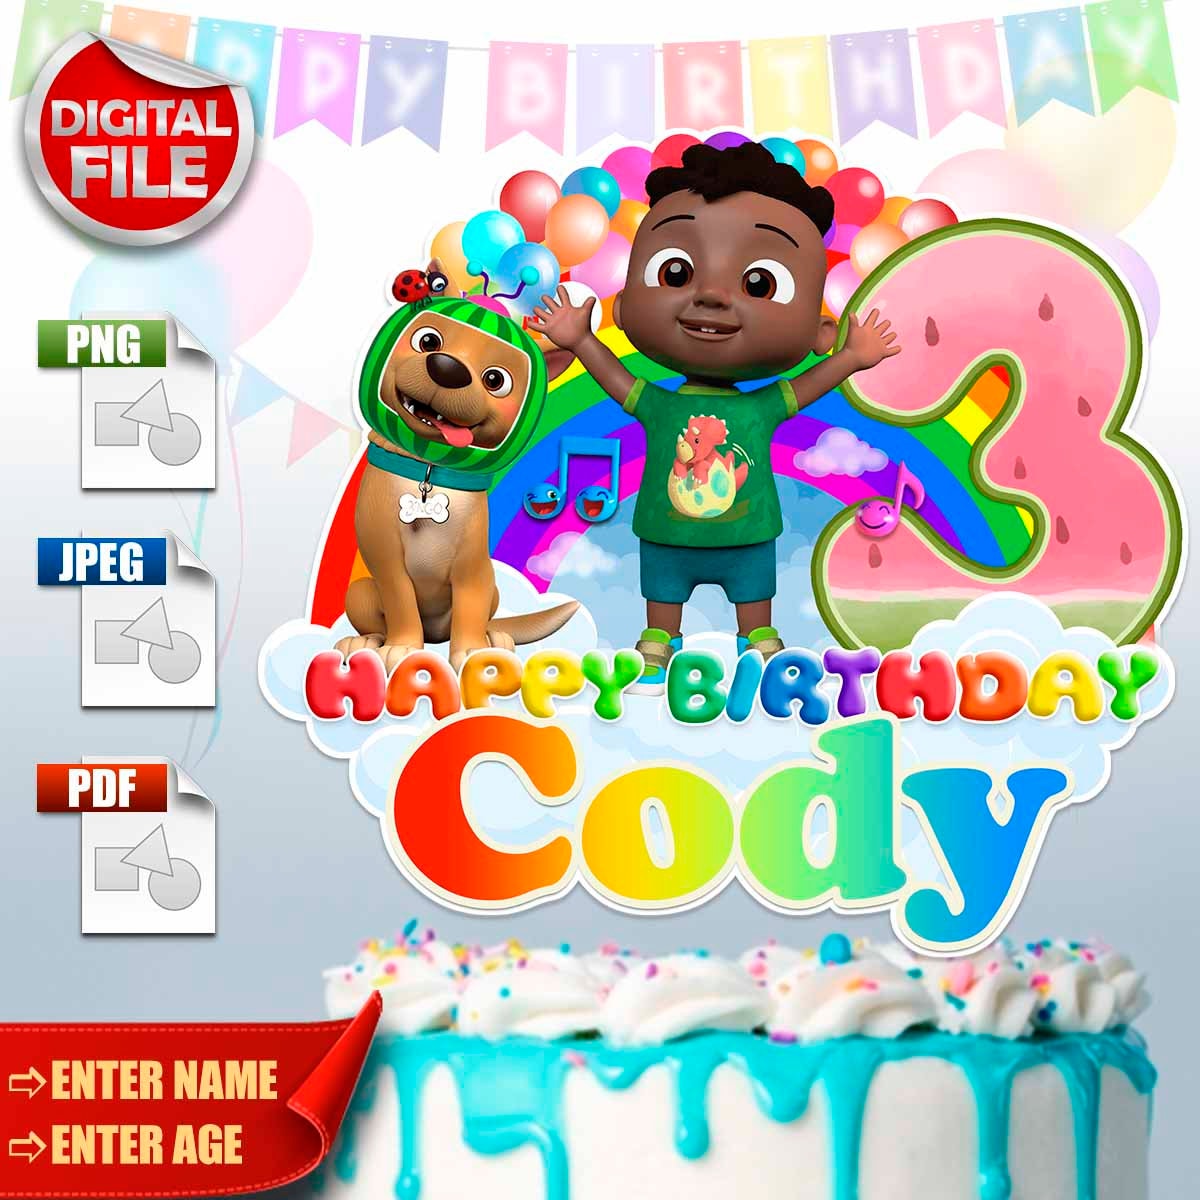 Cocomelon Cece Birthday cake toppe, cocomelon Birthday Party decor,  Cocomelon birthday cake toppers, cocomelon girl birthday – DN Decorlance  By: DarNil Dynasty LLC